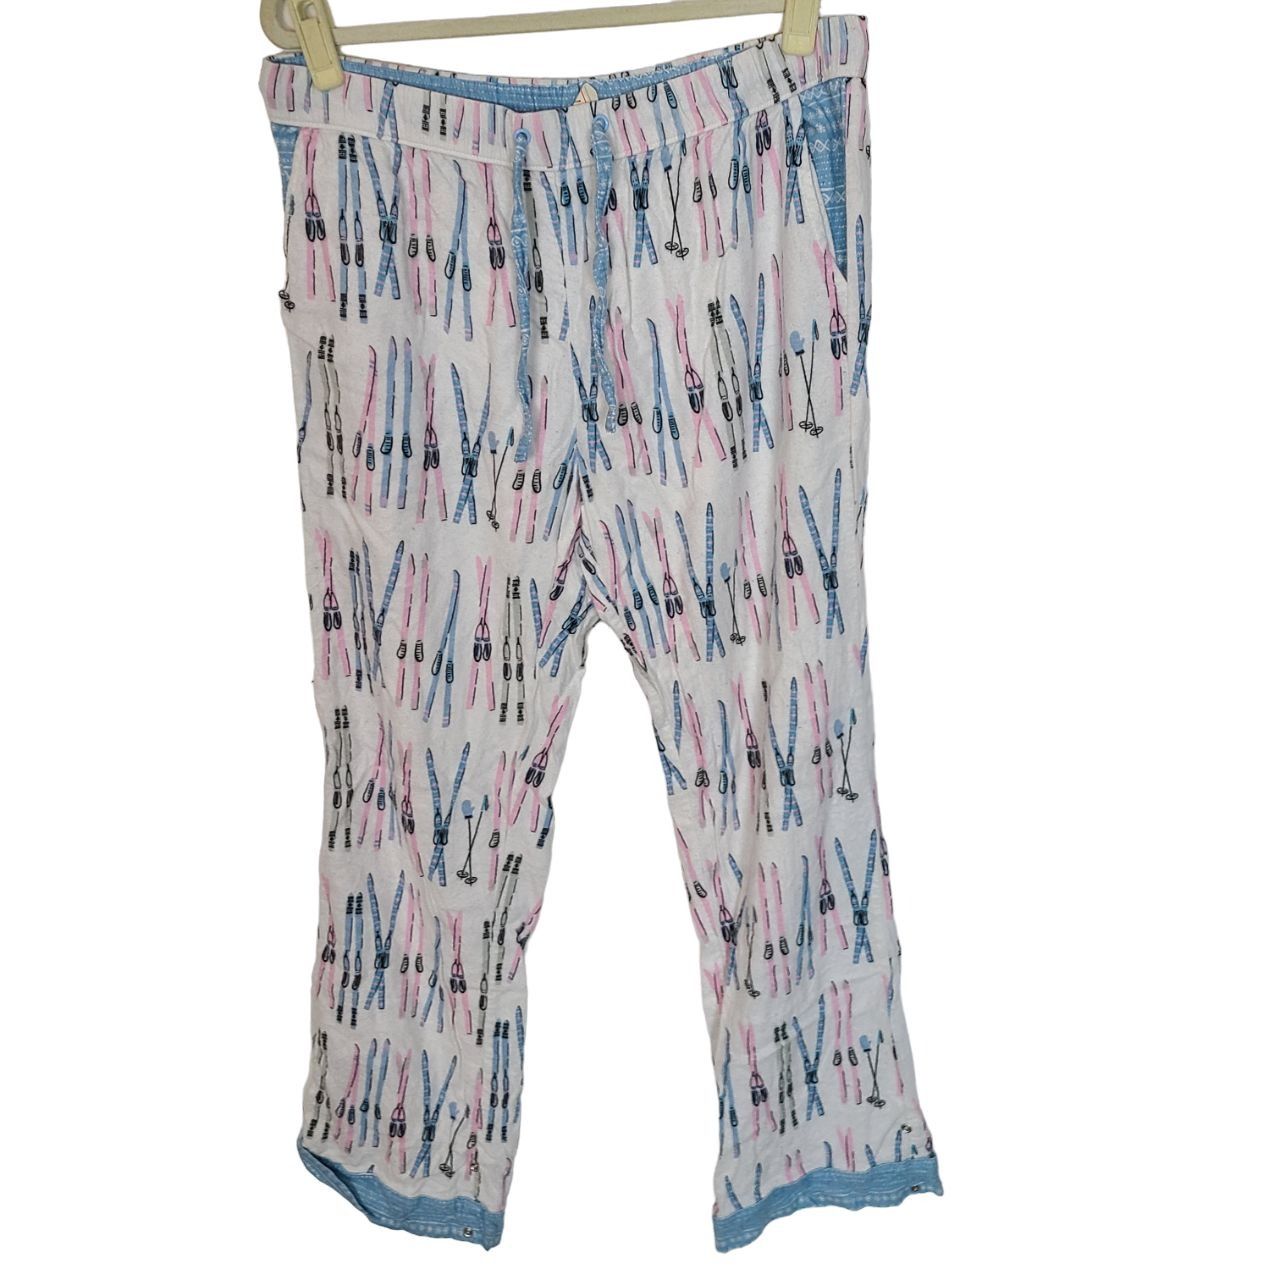 Other Munki Munki Womens M White Ski Print Flannel 2-Piece Pajamas Size M / US 6-8 / IT 42-44 - 10 Thumbnail